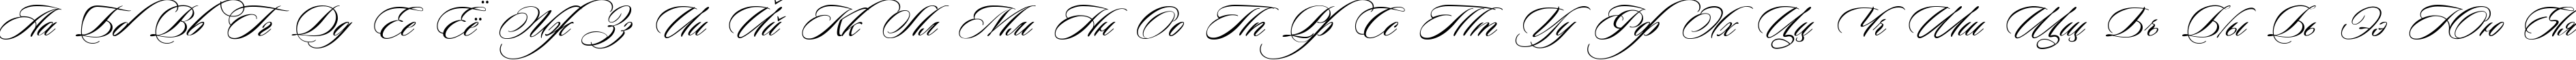 Пример написания русского алфавита шрифтом Ceremonious Three